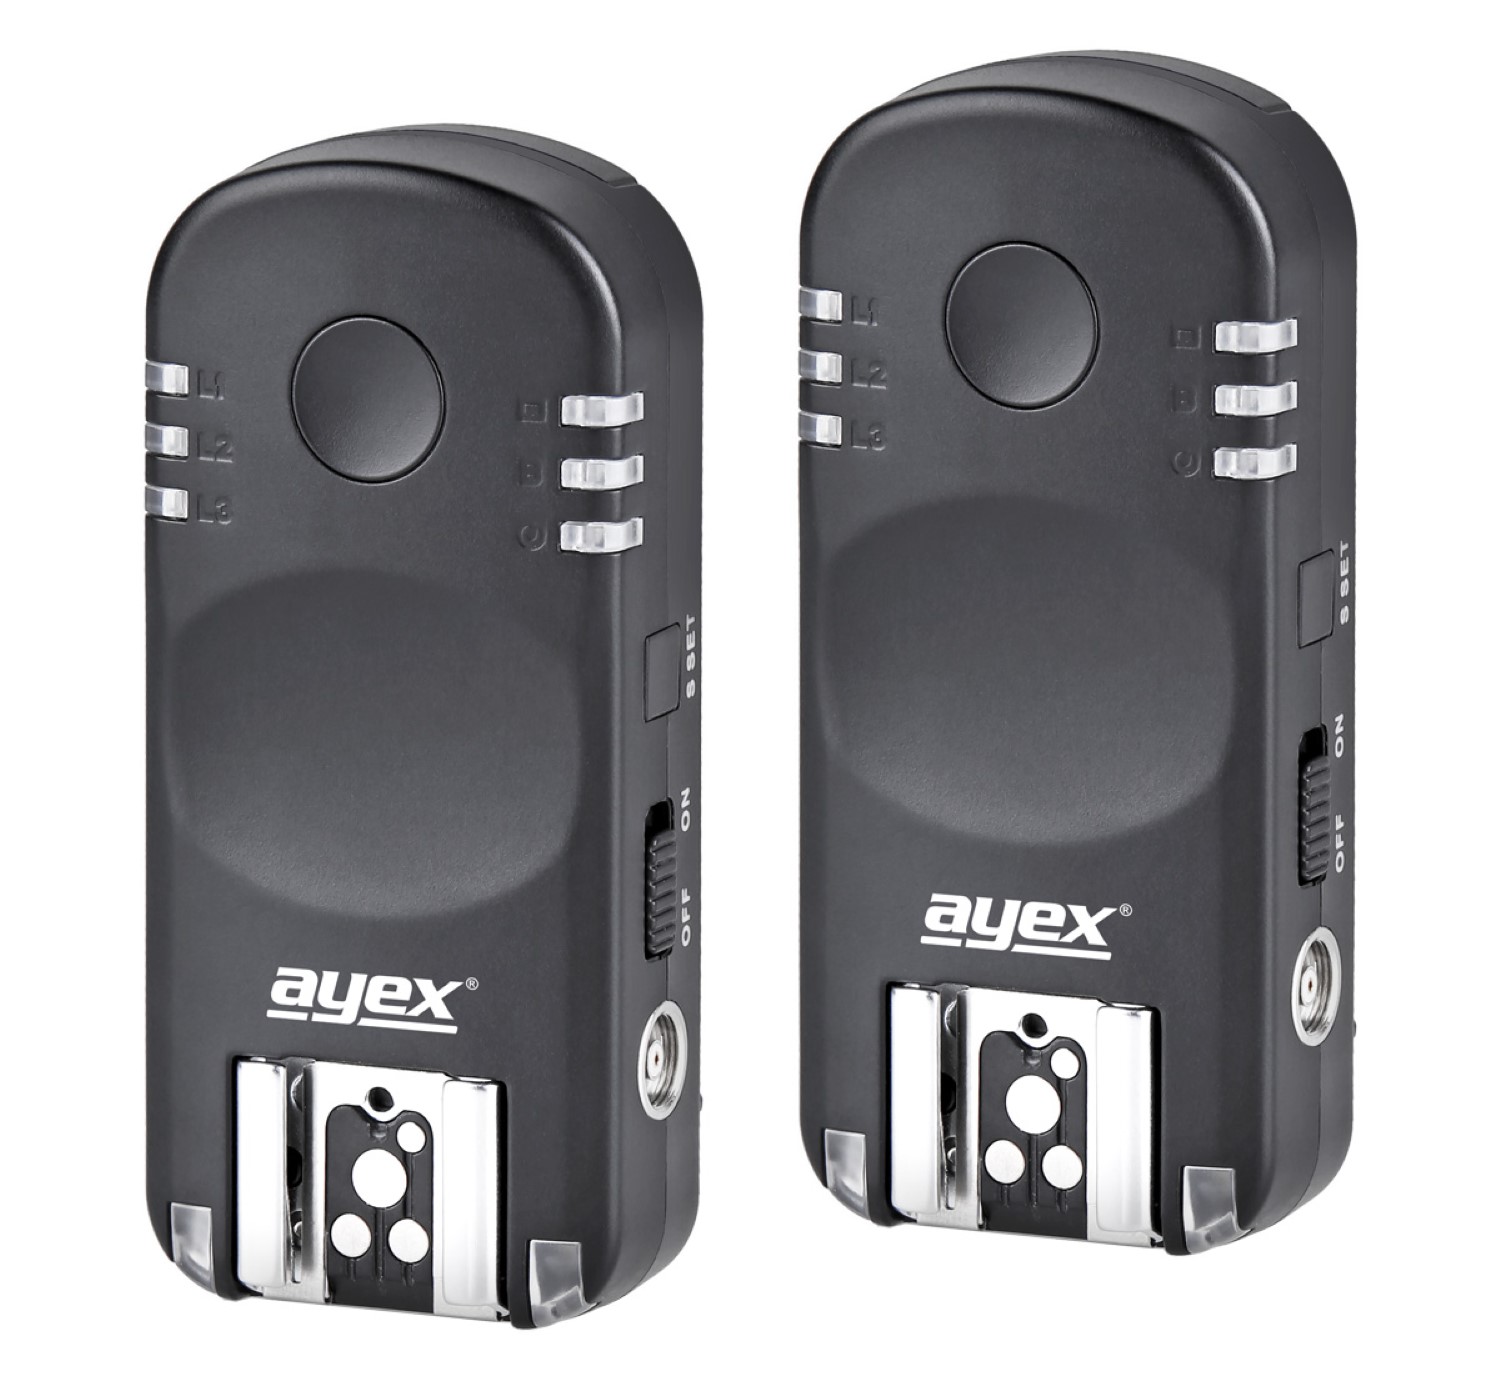 ayex AX-BA1 Funk Blitzauslöser und Fernauslöser für Nikon Kameras, Blitz & Kameraauslöser inkl. 3 Transceivern